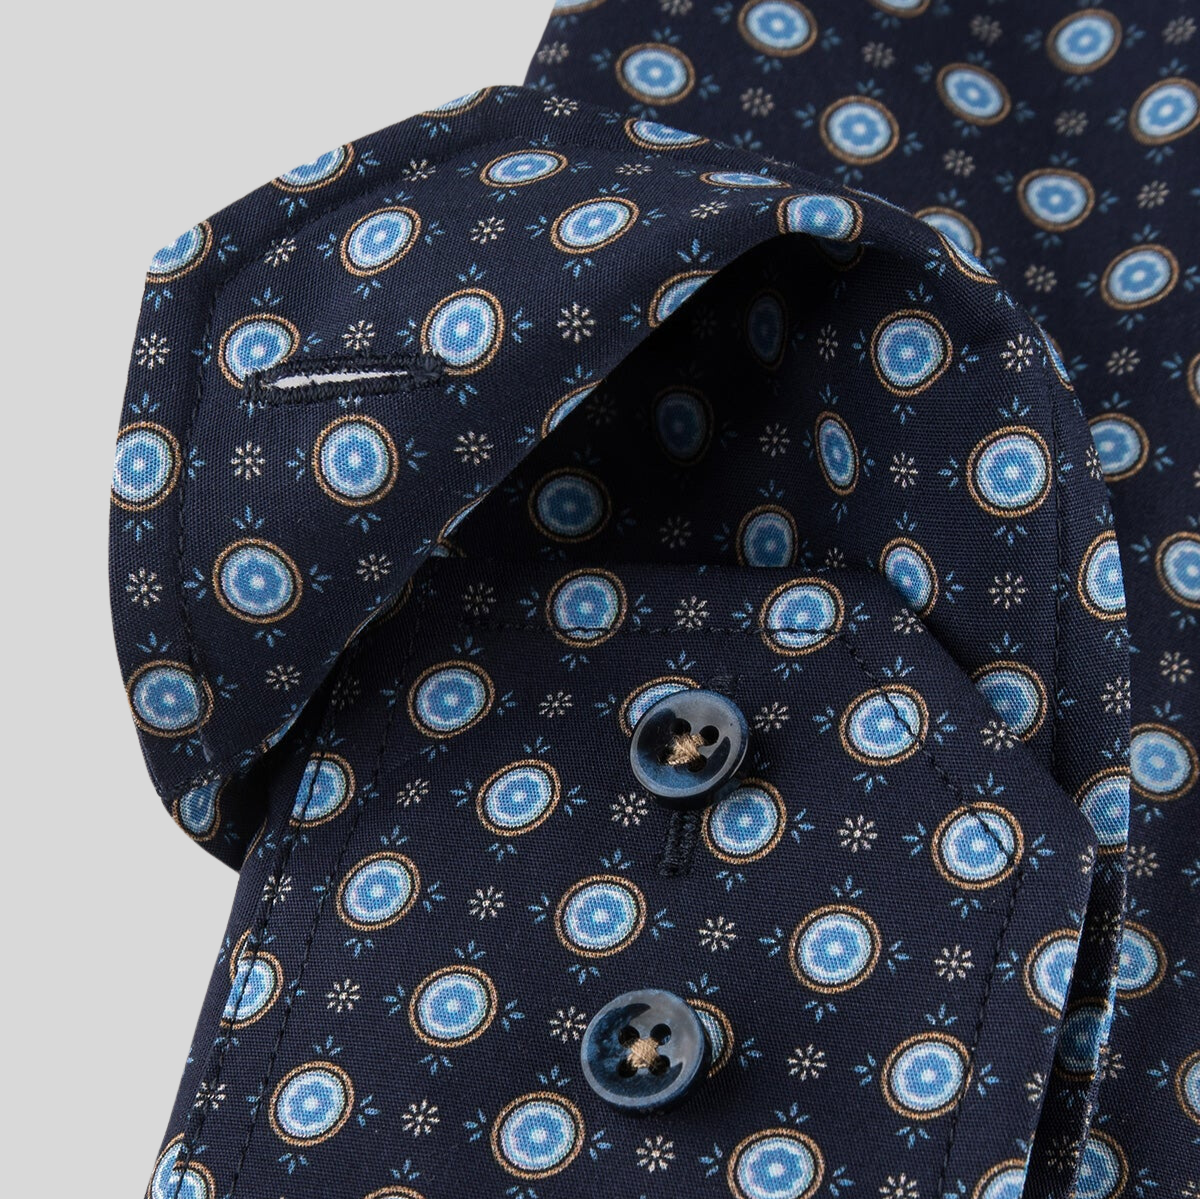 Gotstyle Fashion - Oscar Of Sweden Collar Shirts Geometric Circles Print Shirt - Navy